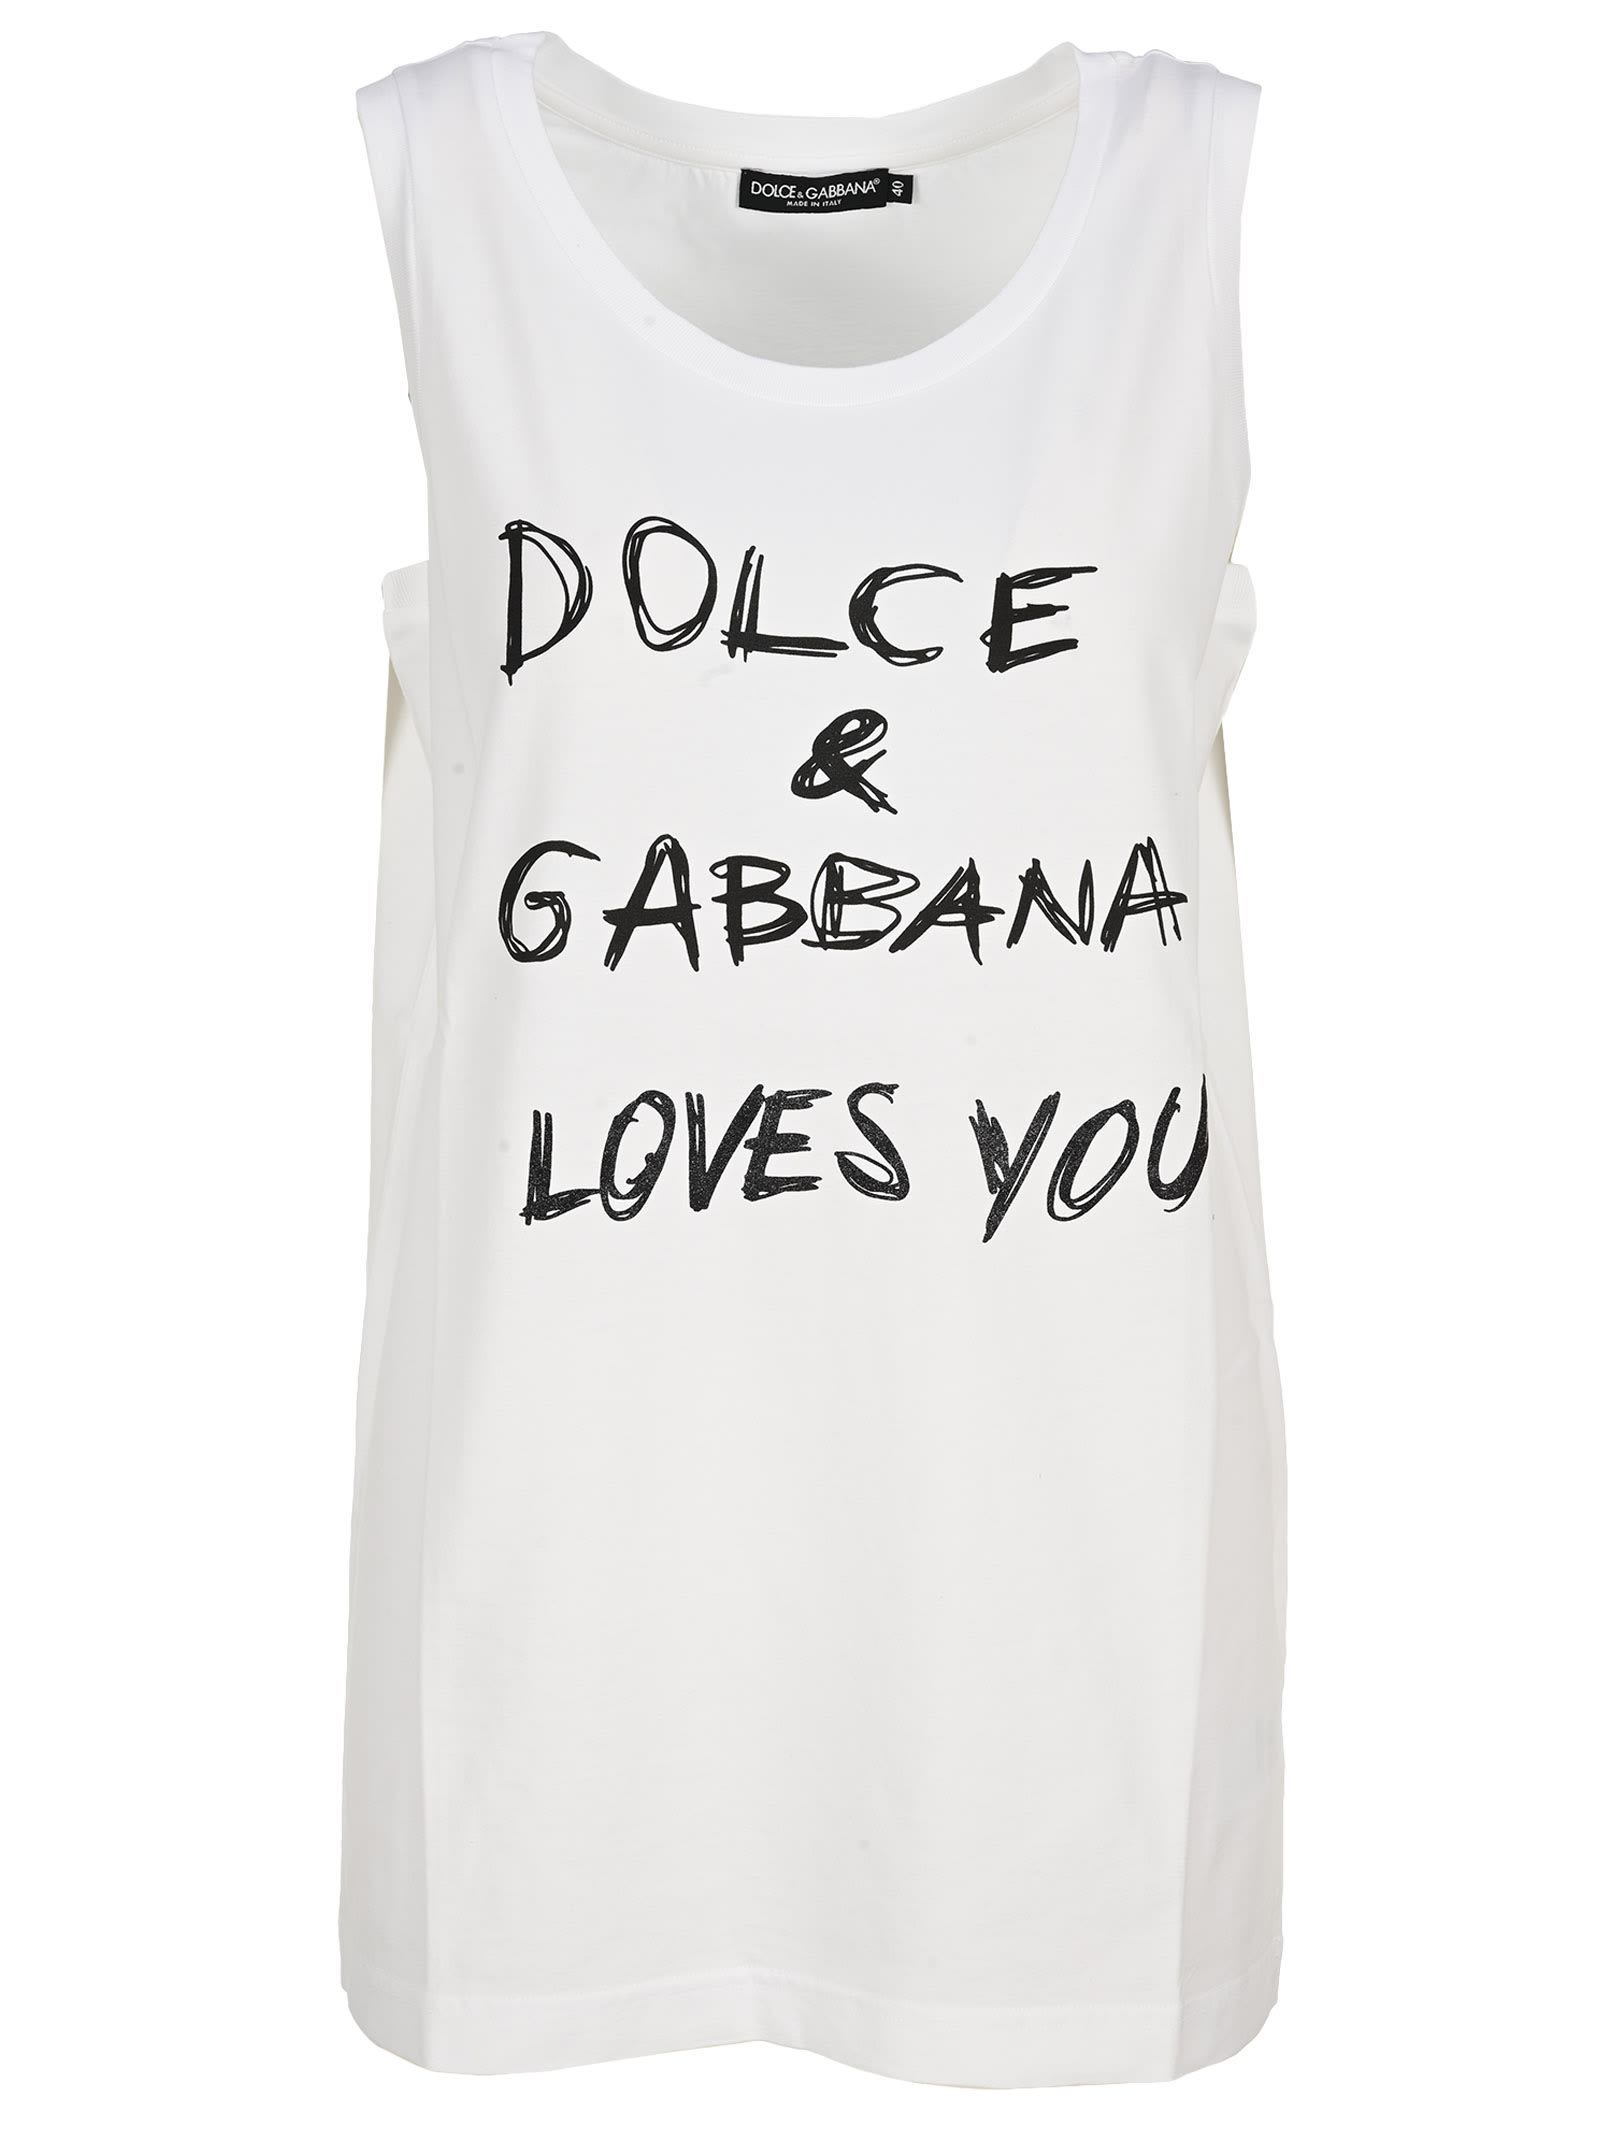 Dolce & Gabbana Dolce & gabbana Jersey Tank Top With Dolce & gabbana Loves You Lettering